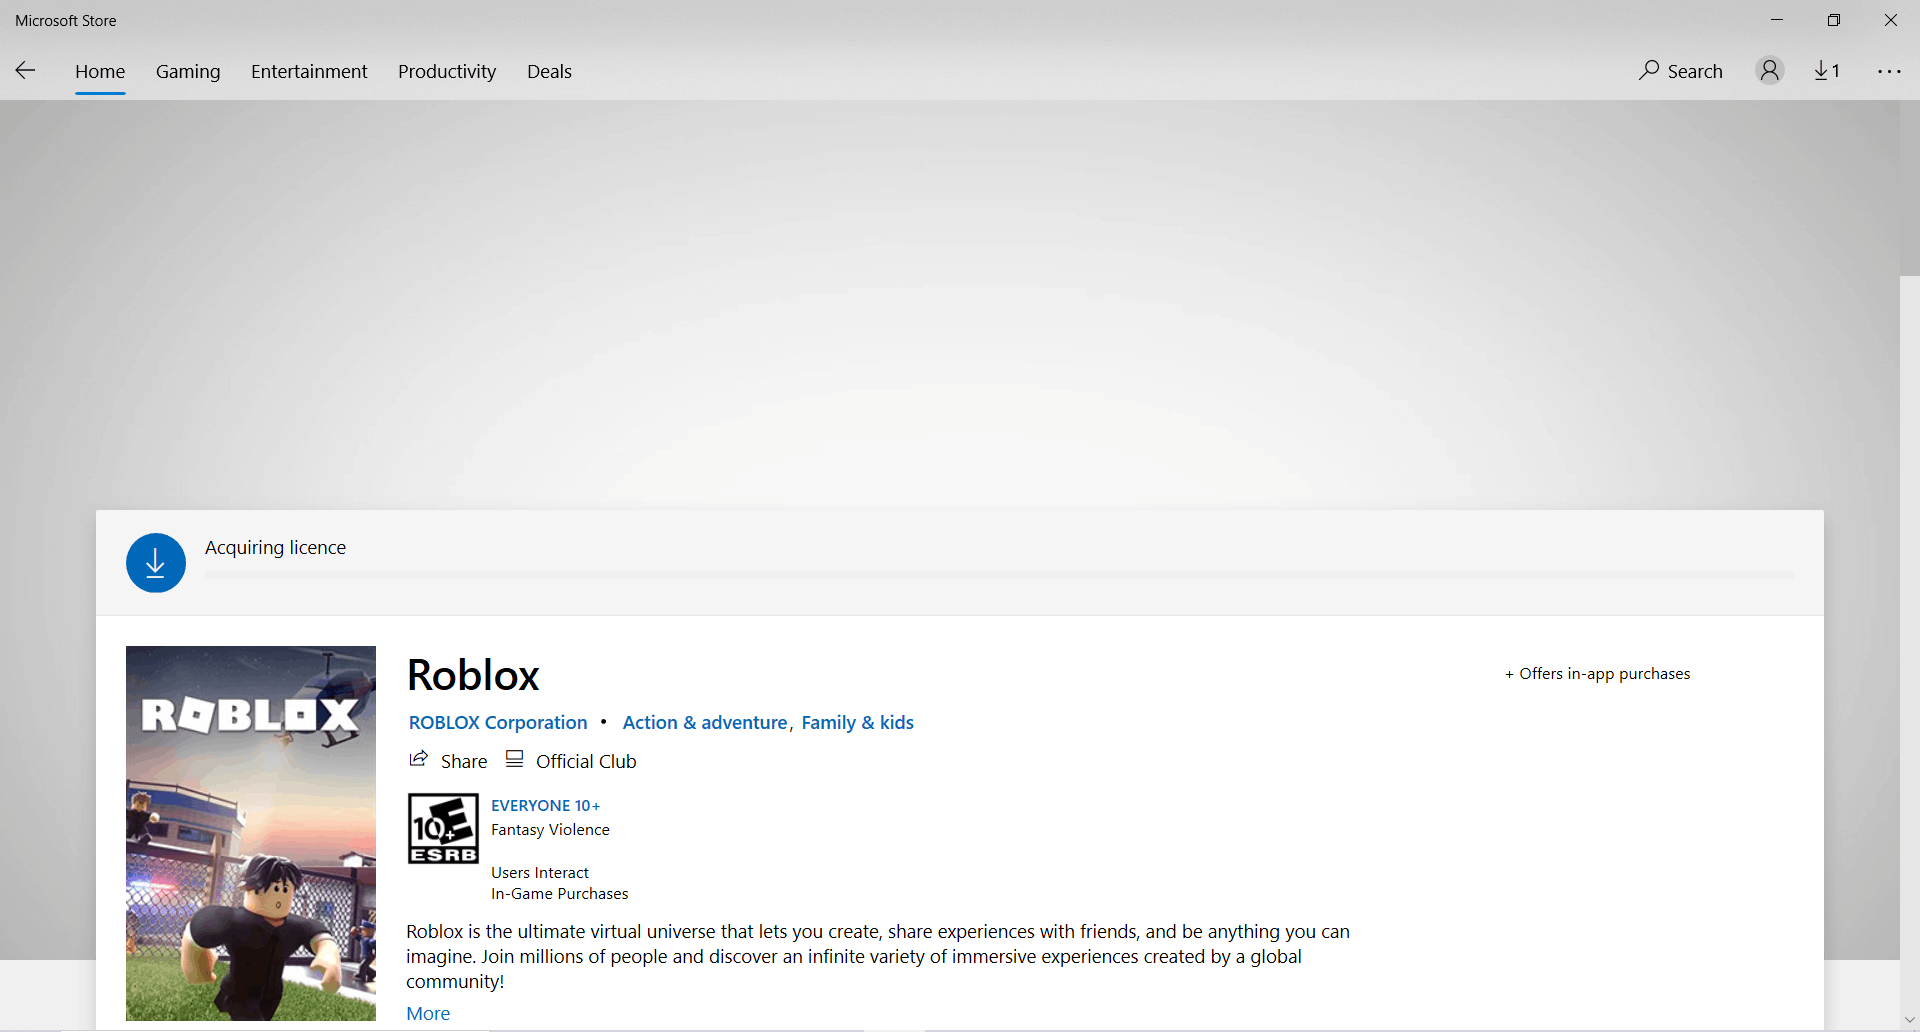 Roblox on Microsoft Store still has old screenshots : r/roblox